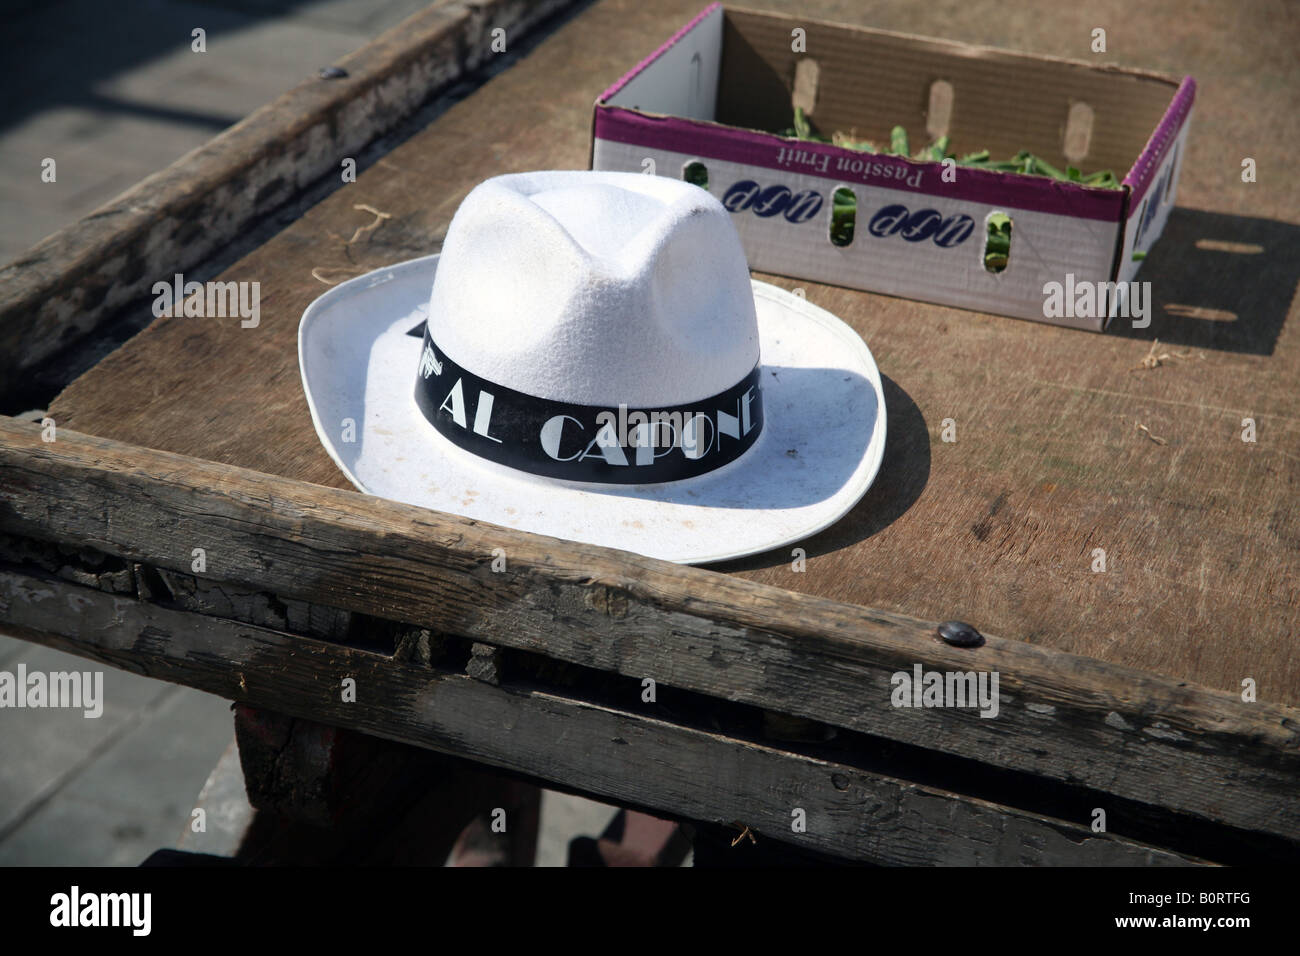 Al Capone hat left on market barrow in London Stock Photo